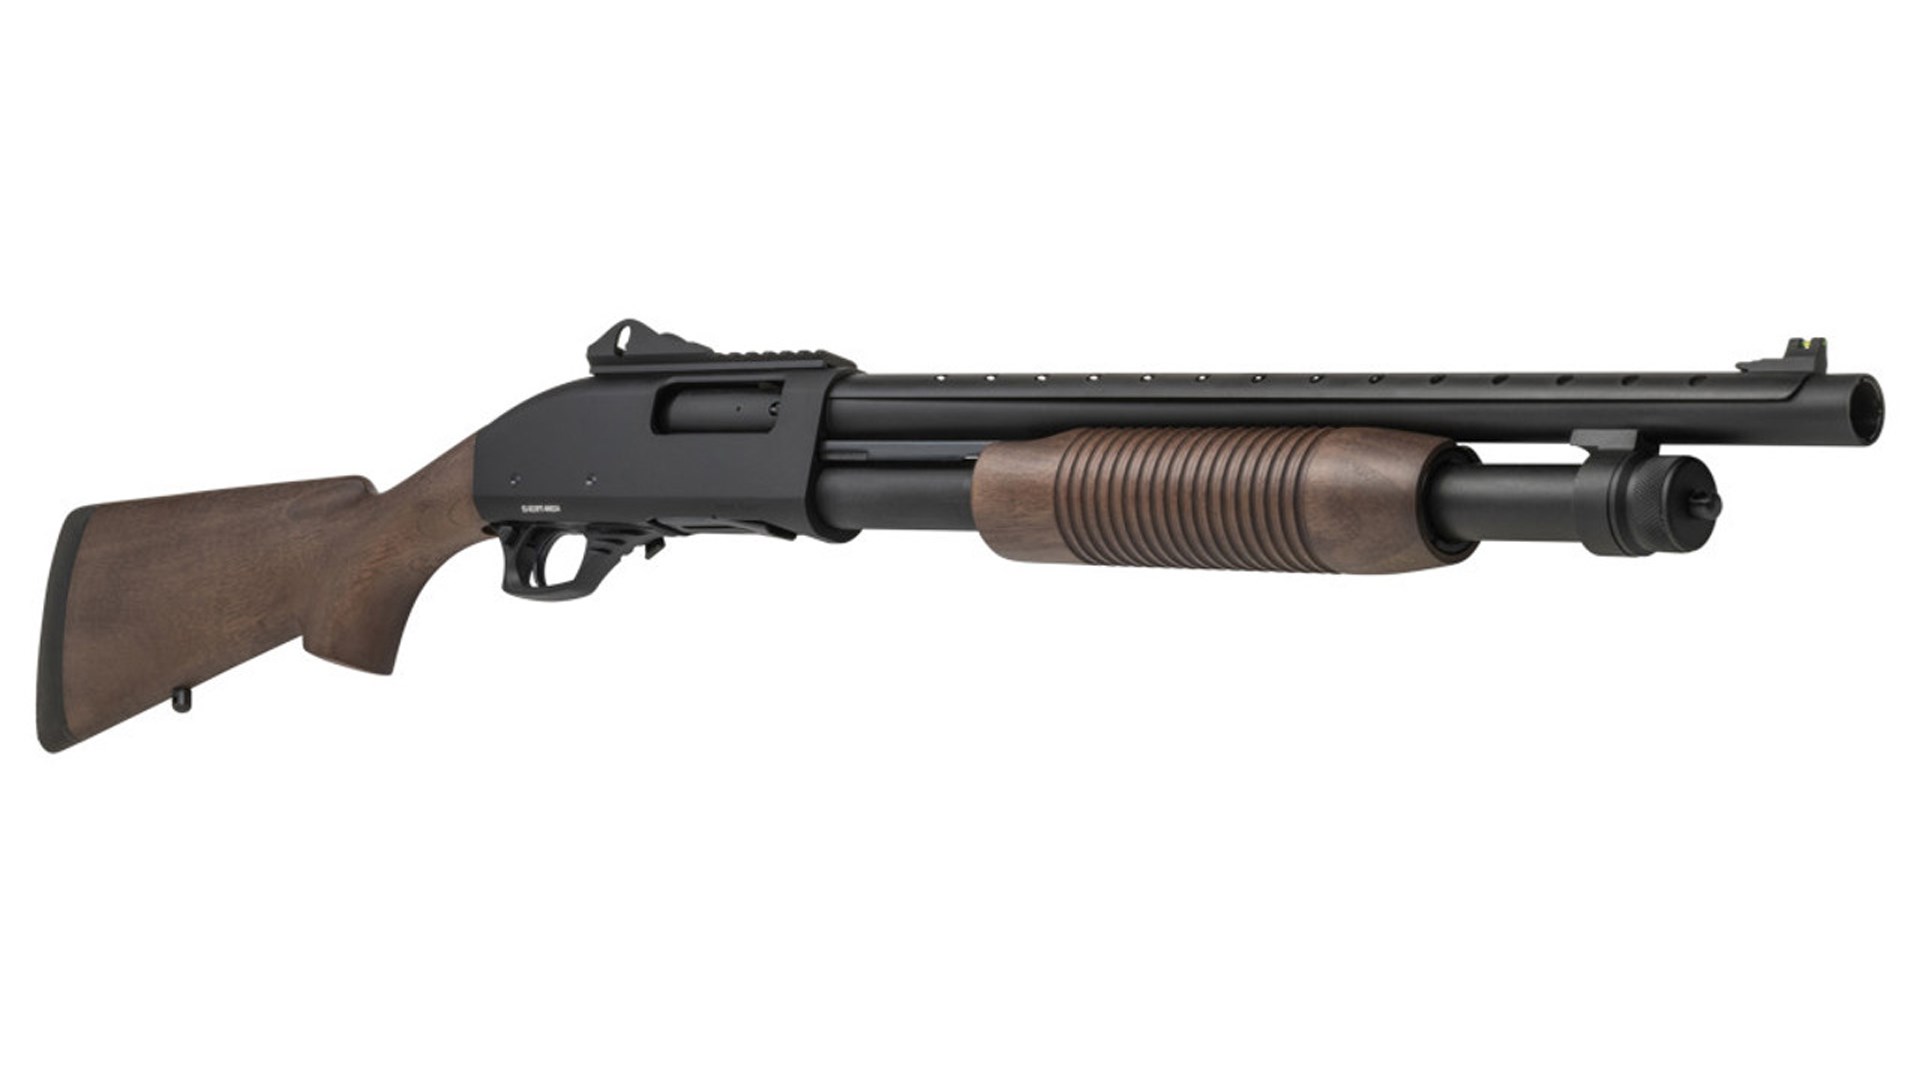 Right side view of the Tokarev USA TX3 20HD A1 pump-action shotgun.